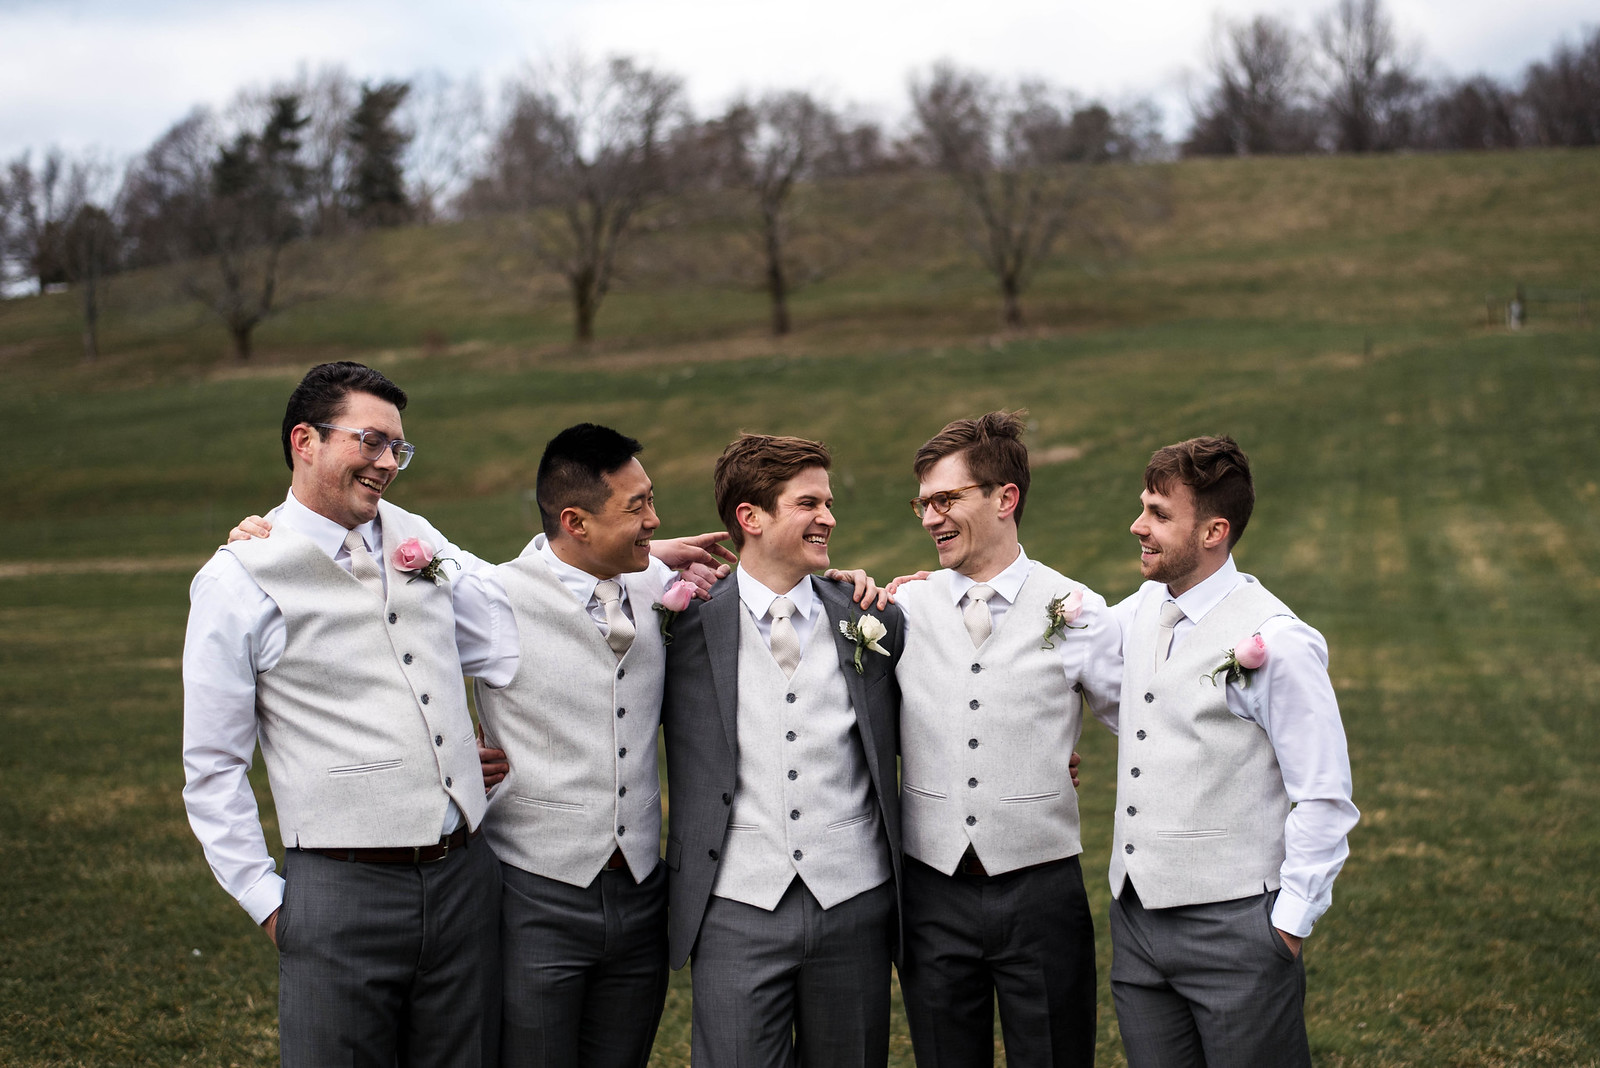 grey-suit-wedding-photography-grooms